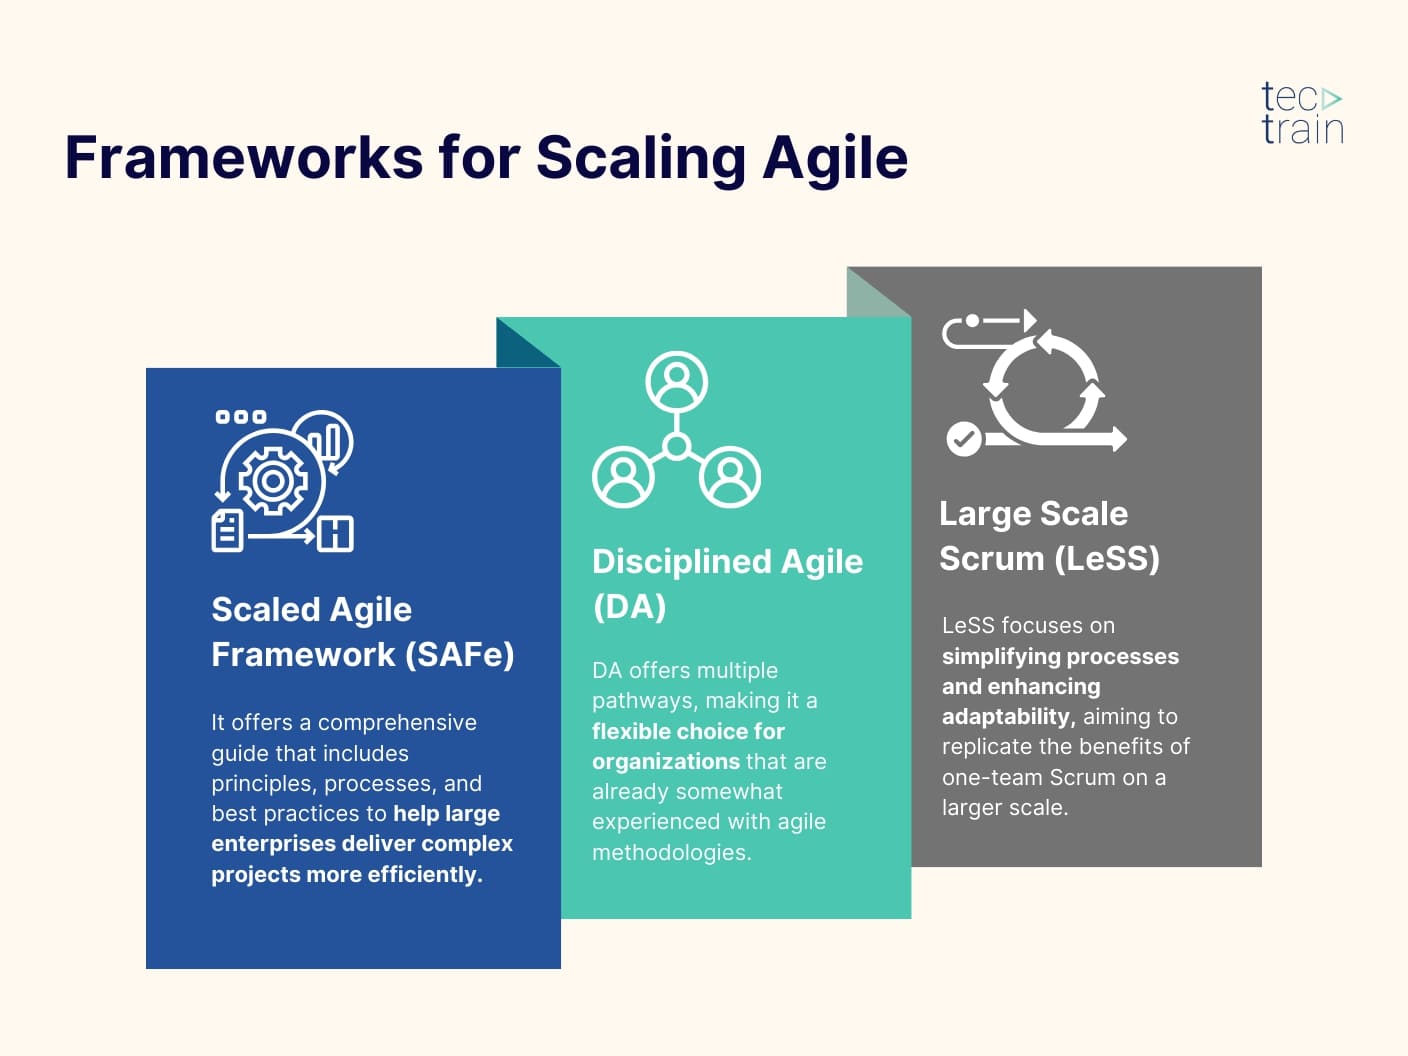 Frameworks for Scaling Agile(Scaled Agile Framework - SAFe, Disciplined Agile - DA, Large Scale Scrum - LeSS)